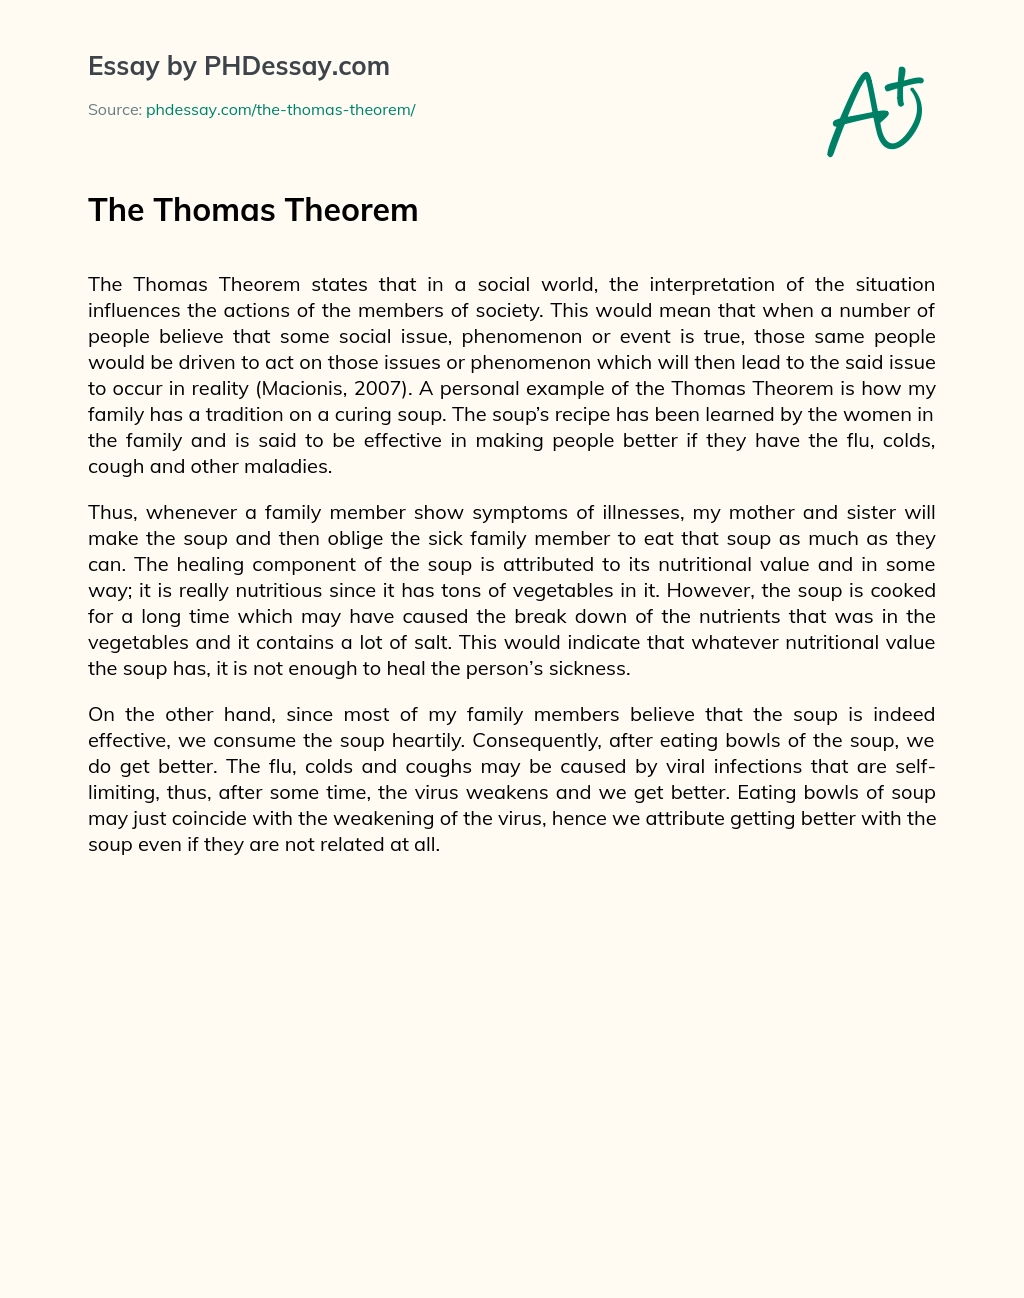 The Thomas Theorem essay